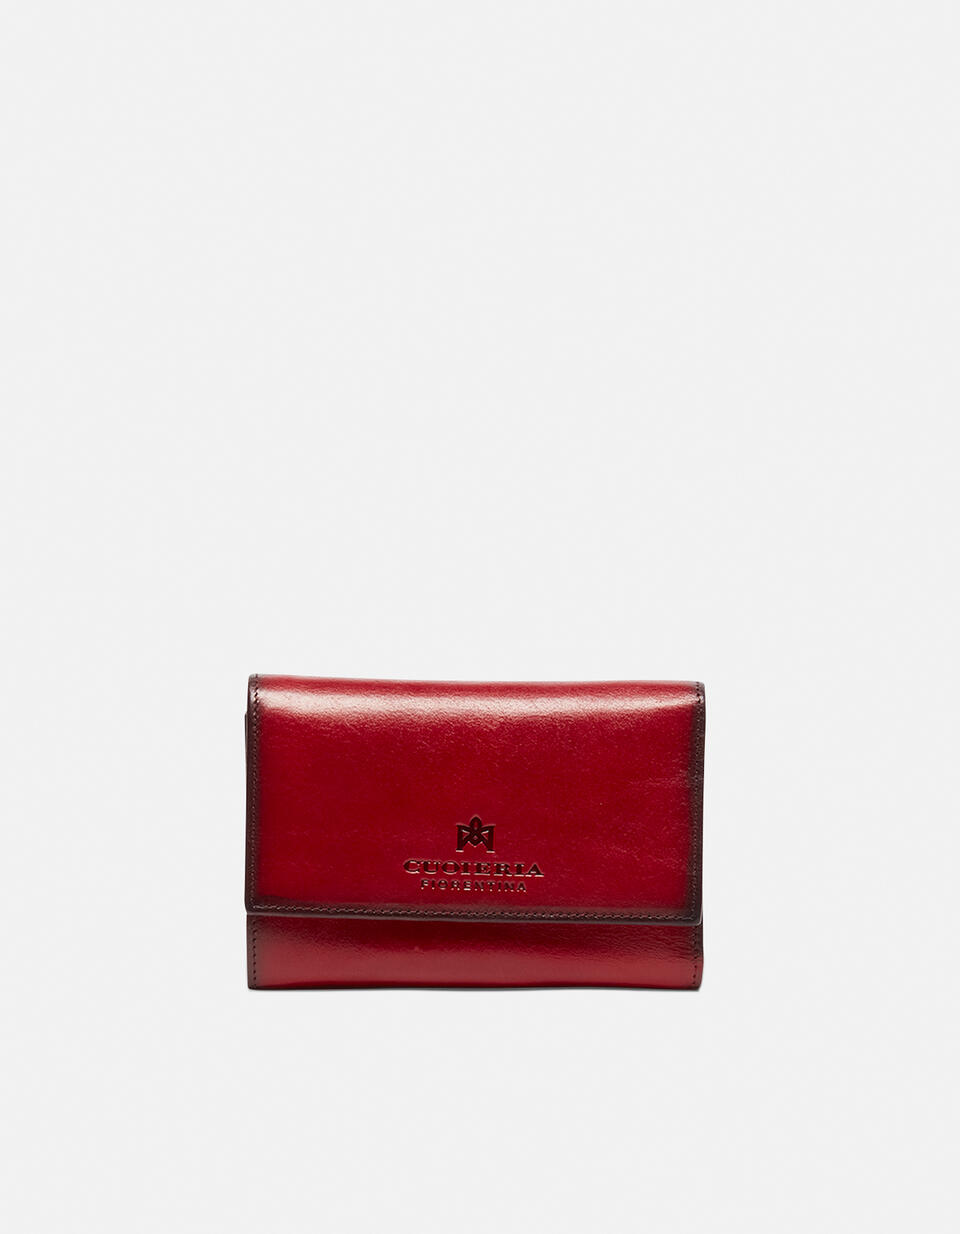 Bifold wallet with side burnt effect - Women's Wallets - Women's Wallets | Wallets ROSSO - Women's Wallets - Women's Wallets | WalletsCuoieria Fiorentina